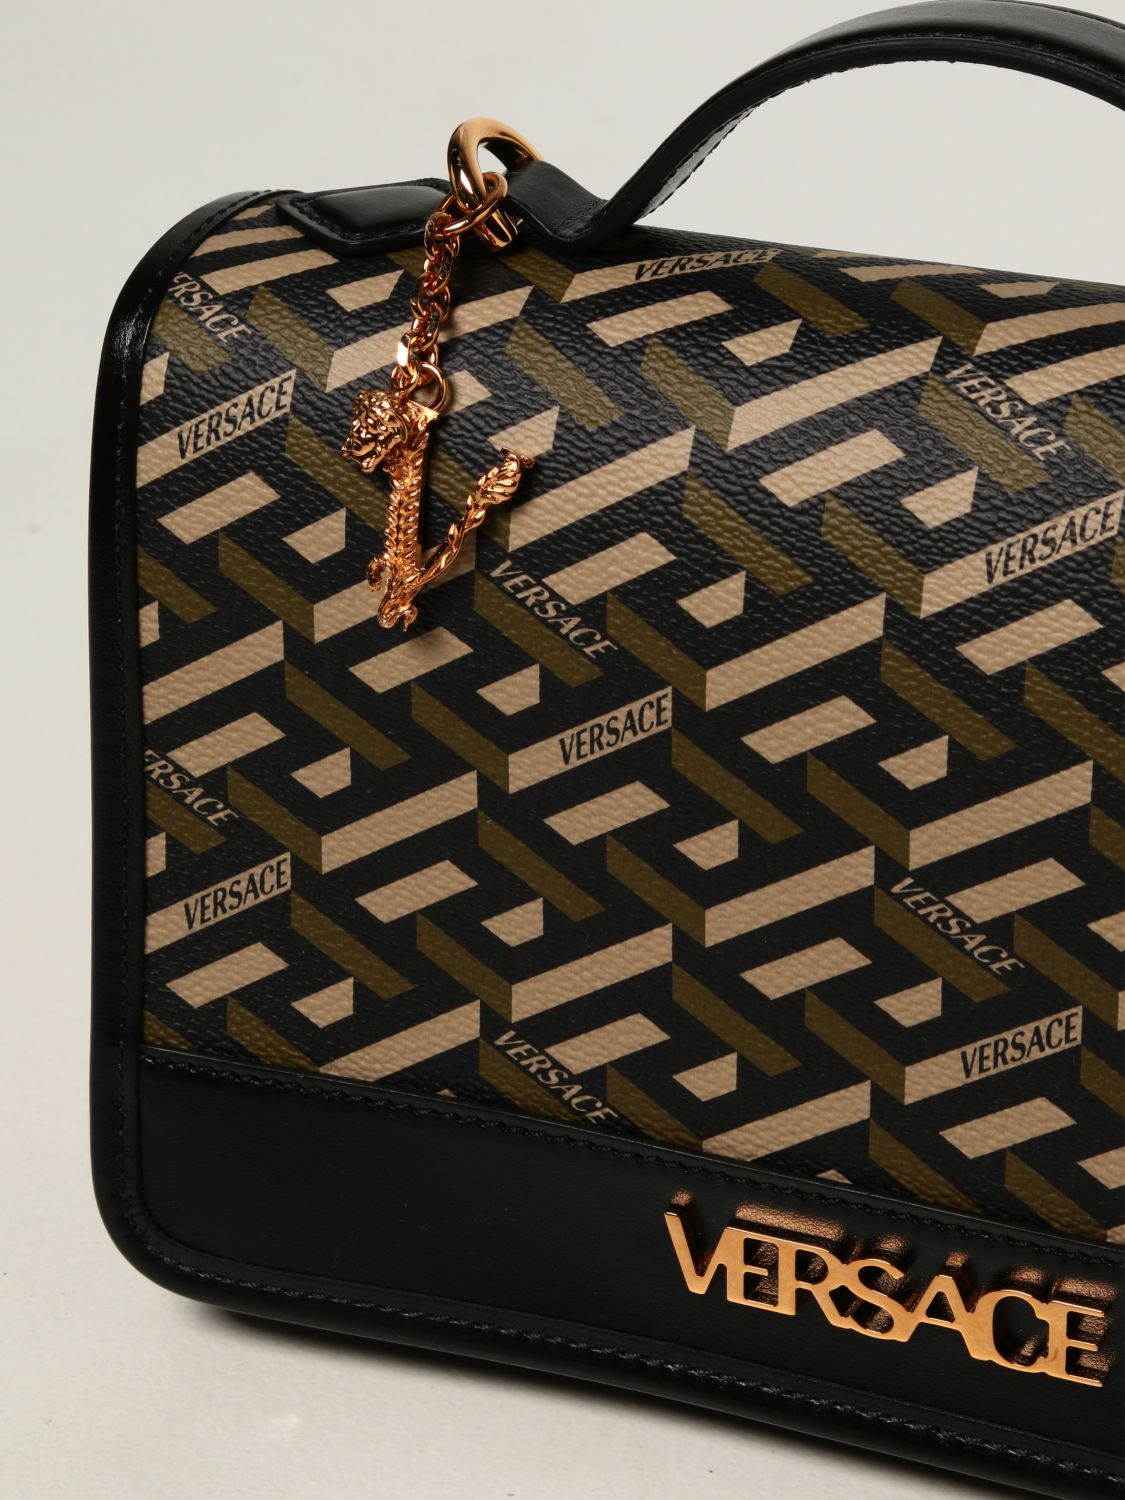 Versace La Greca Signature Tote Bag